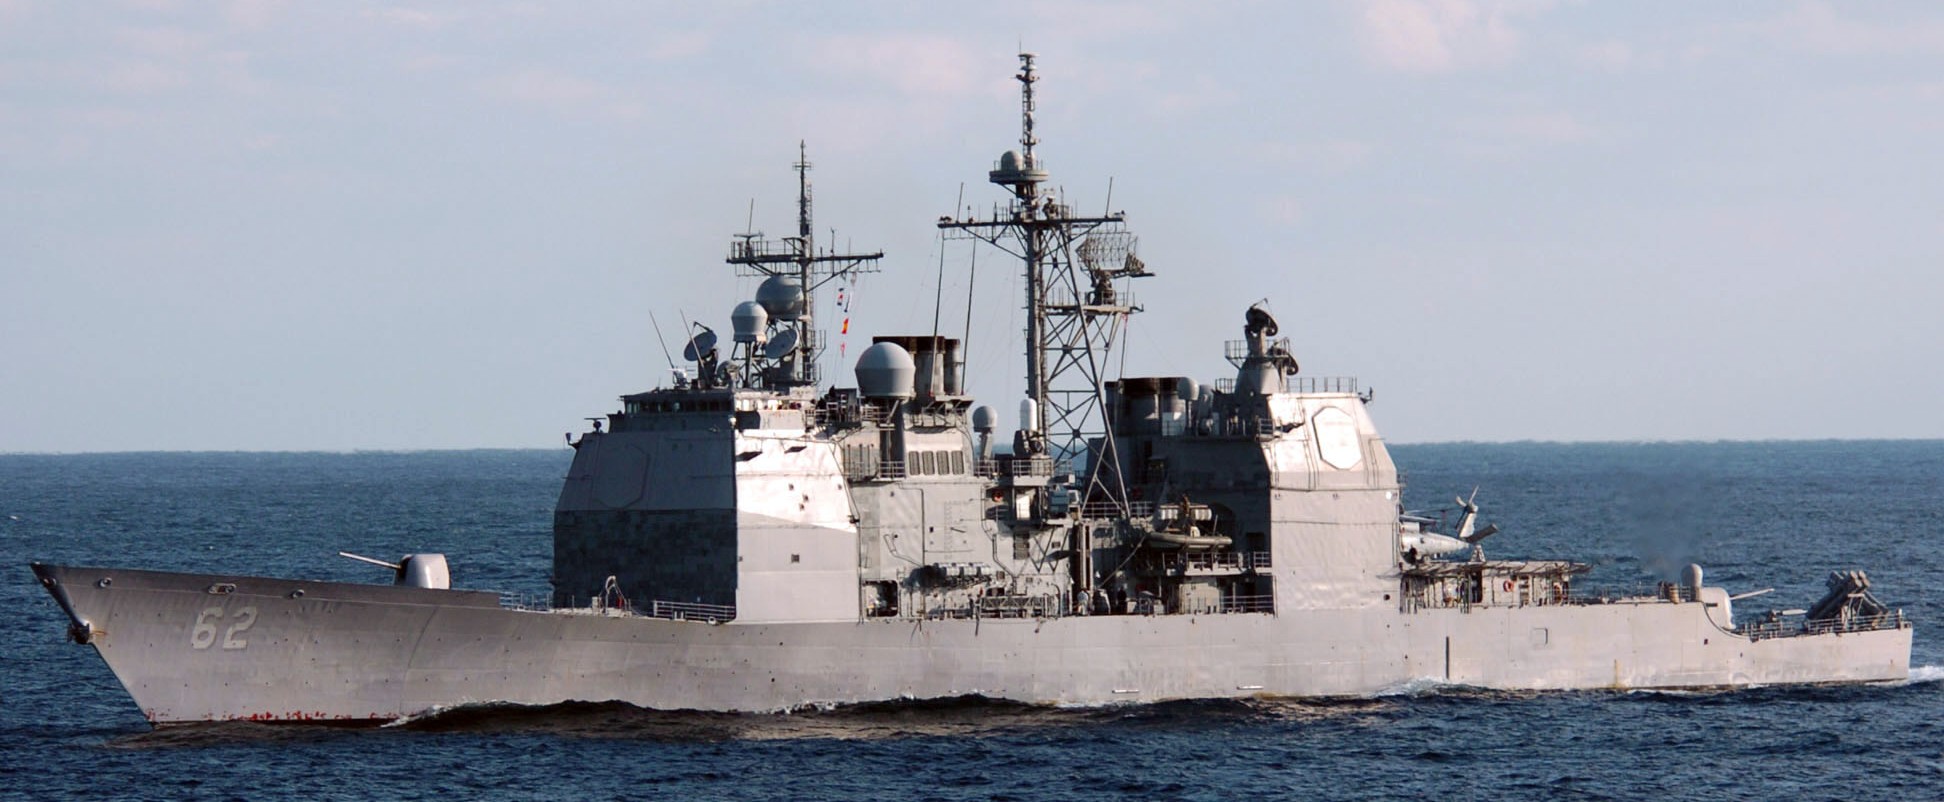 cg-62 uss chancellorsville ticonderoga class guided missile cruiser aegis us navy 10